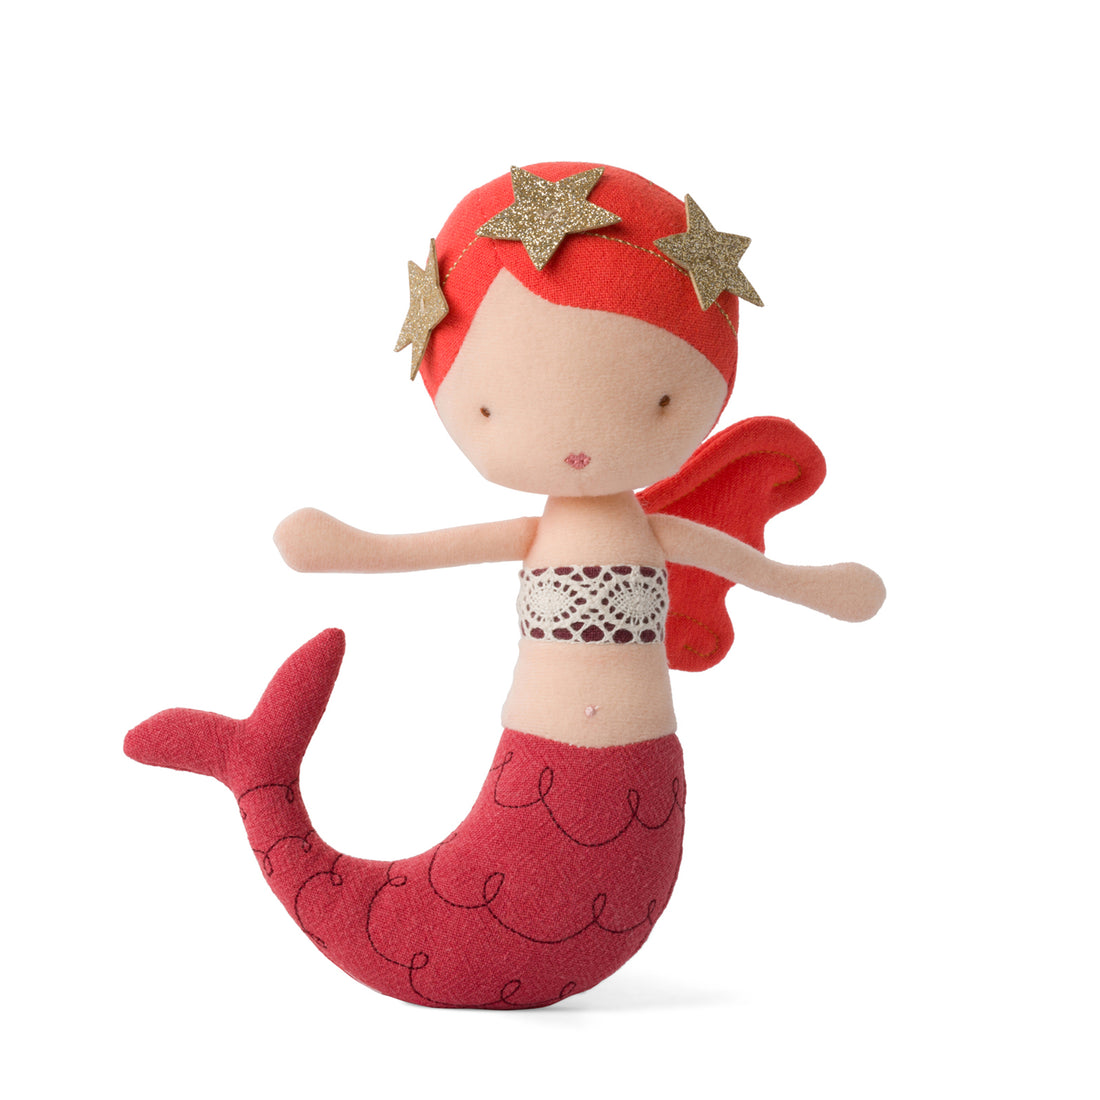 picca-loulou-mermaid-isla-22cm-picc-25215023- (1)